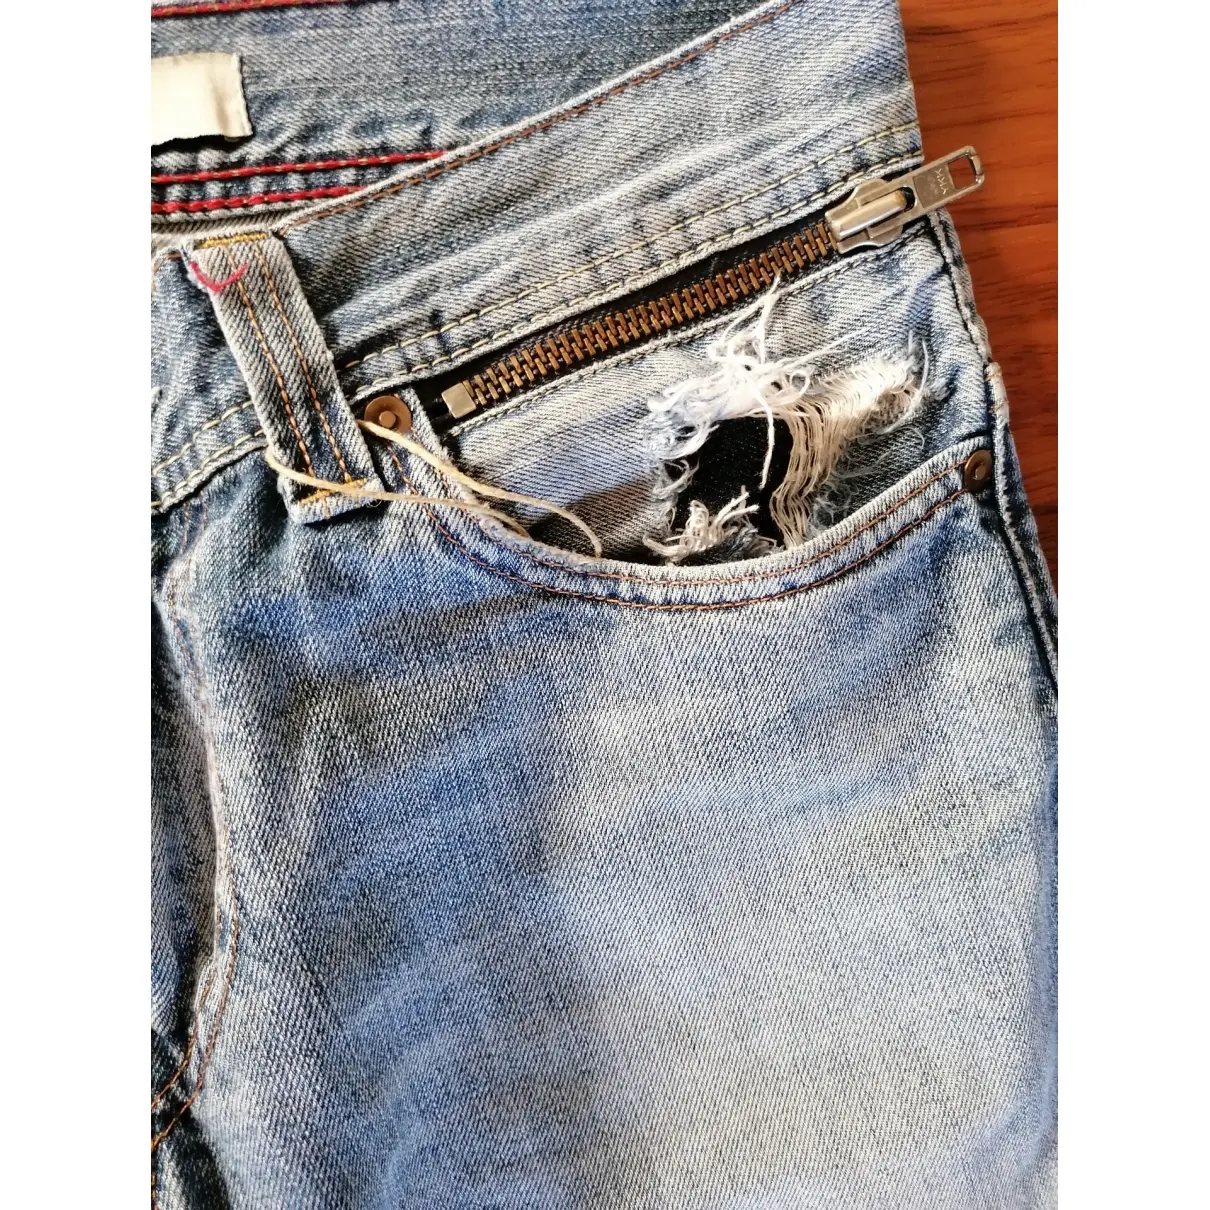 Denim - Jeans Jeans Levi's Vintage Clothing - Vintage